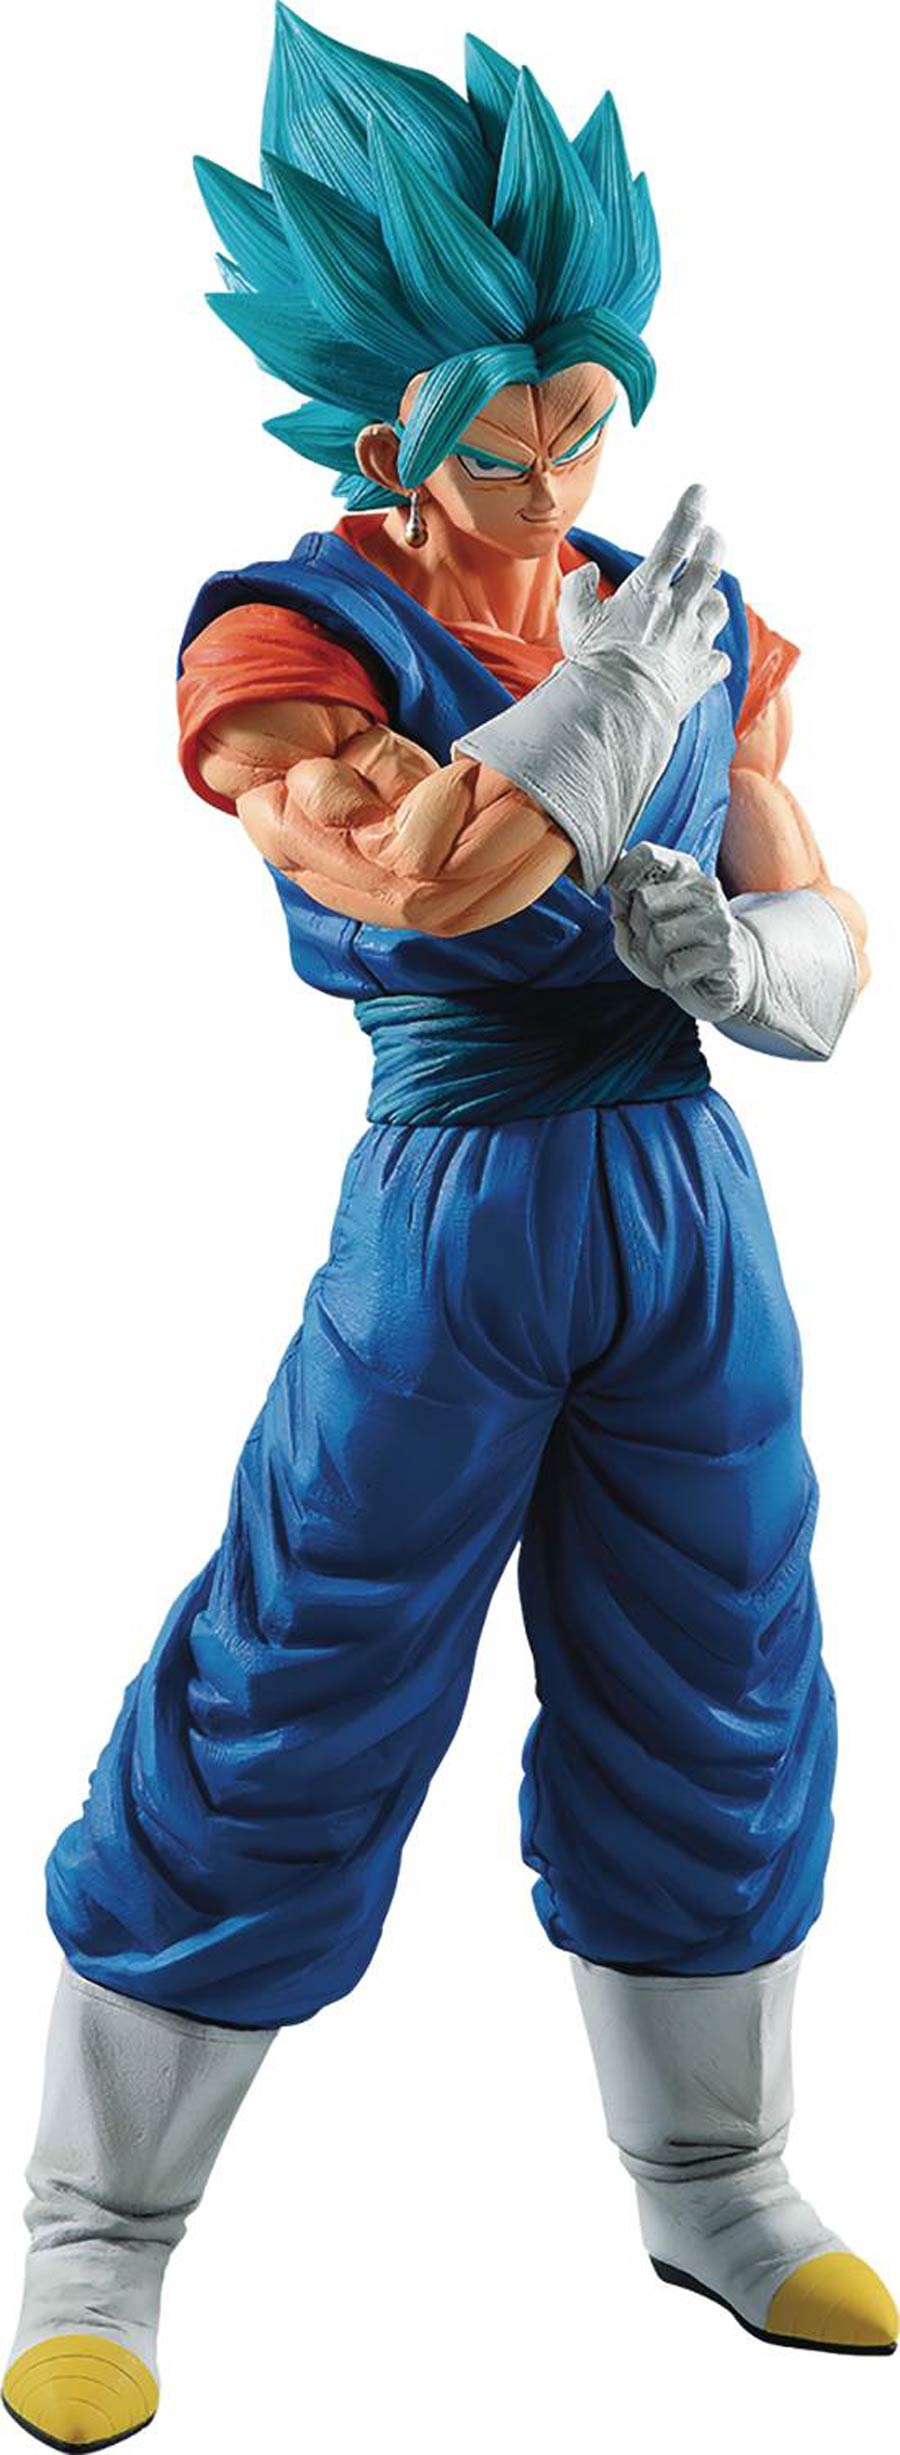 Dragon Ball Super Ichiban - Super Saiyan God Super Saiyan Vegito (Extreme Saiyan) Figure